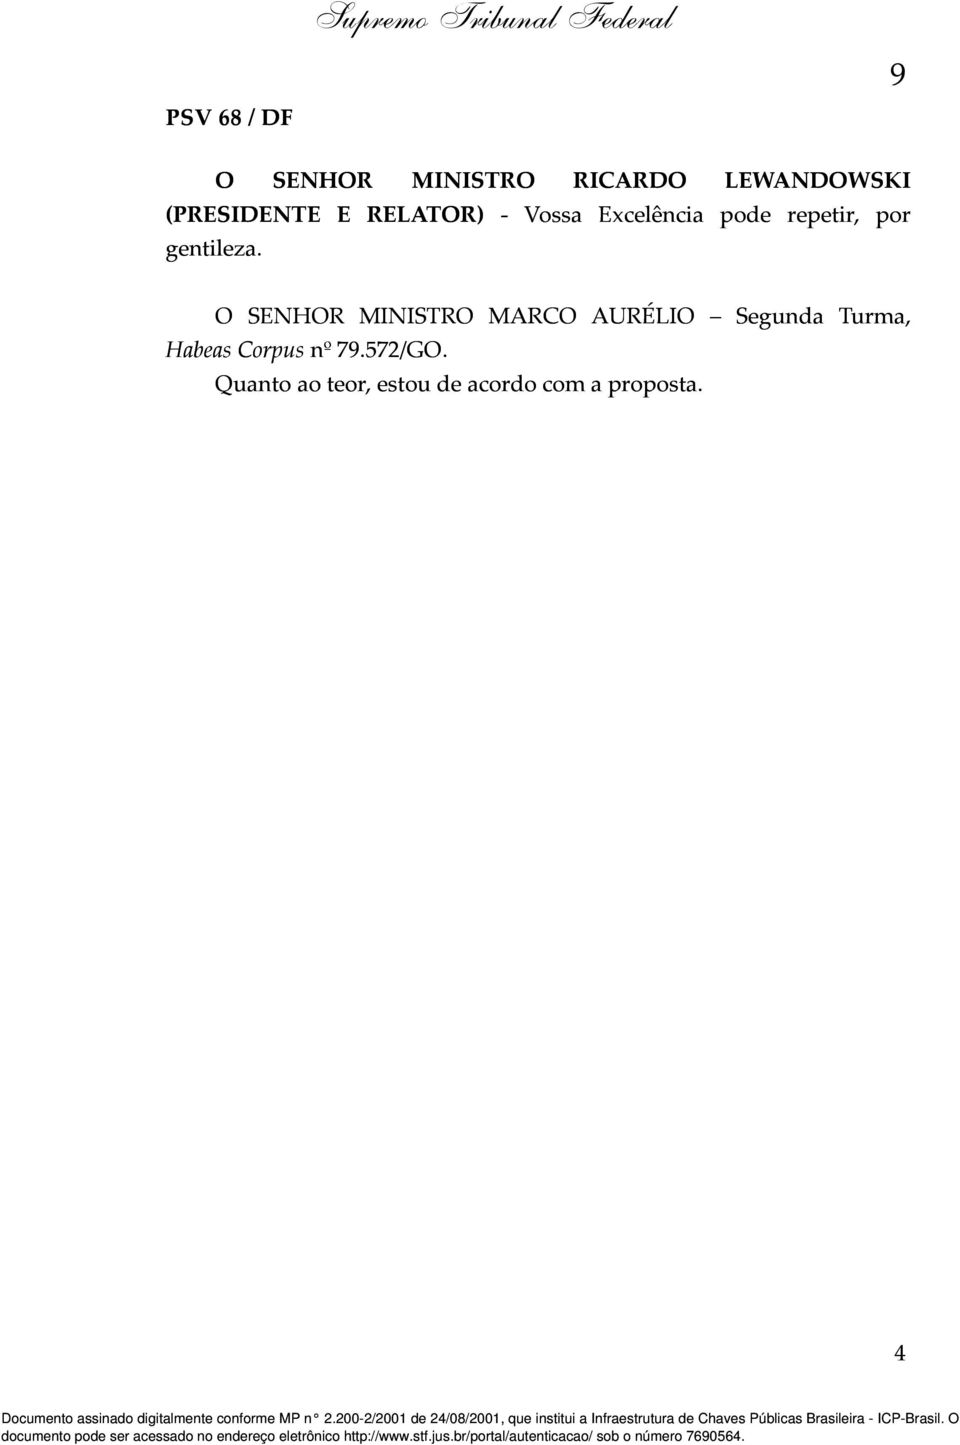 gentileza. O SENHOR MINISTRO MARCO AURÉLIO Segunda Turma, Habeas Corpus nº 79.572/GO.